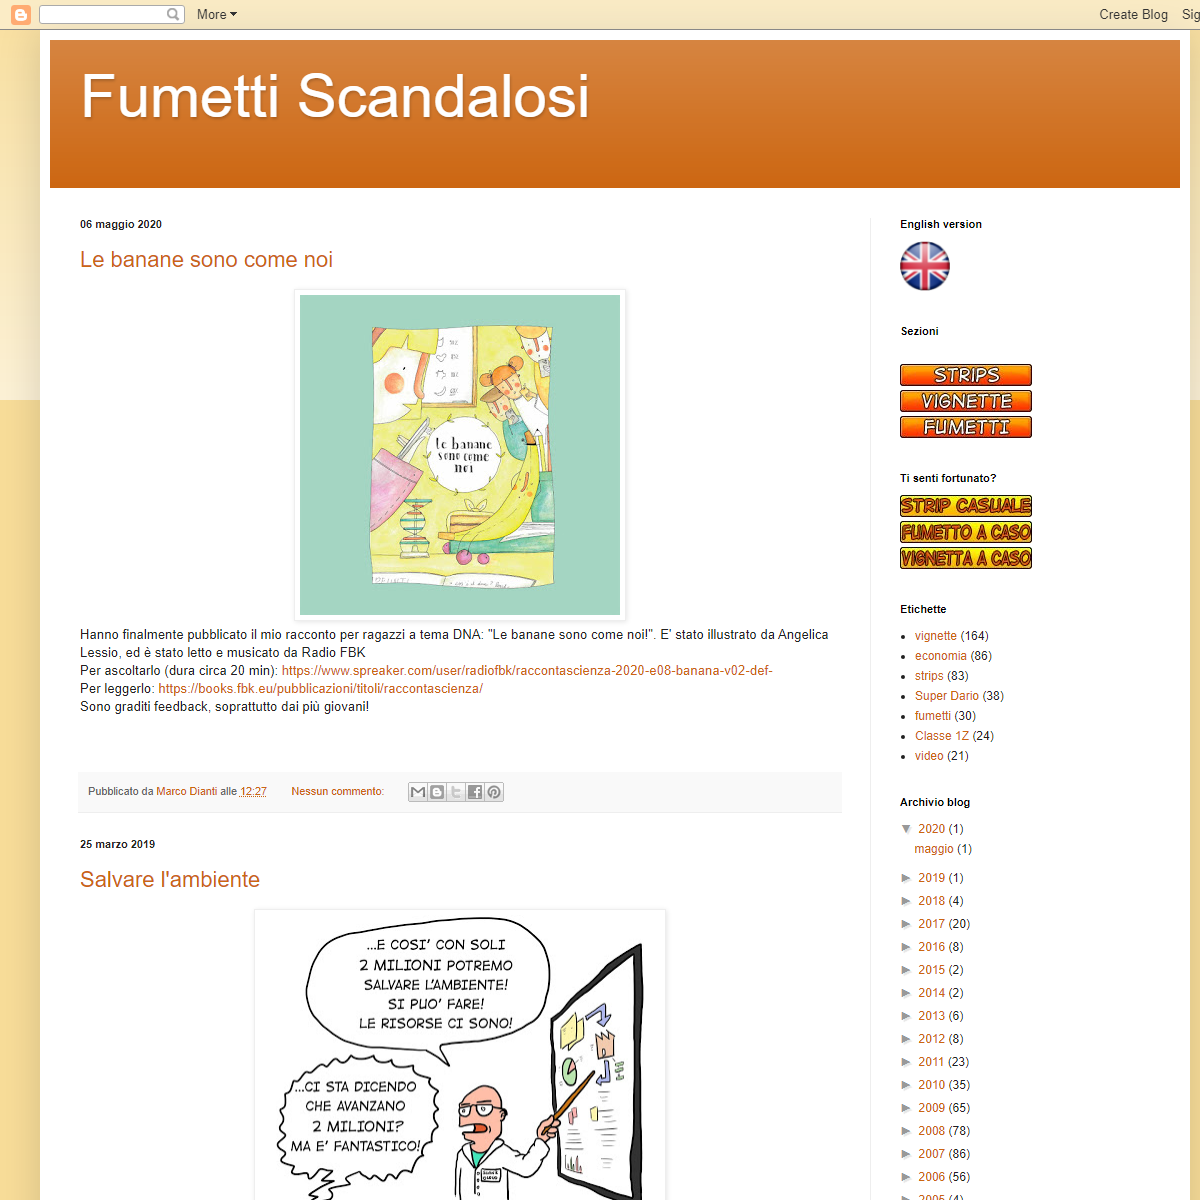 A complete backup of https://fumettiscandalosi.blogspot.com/